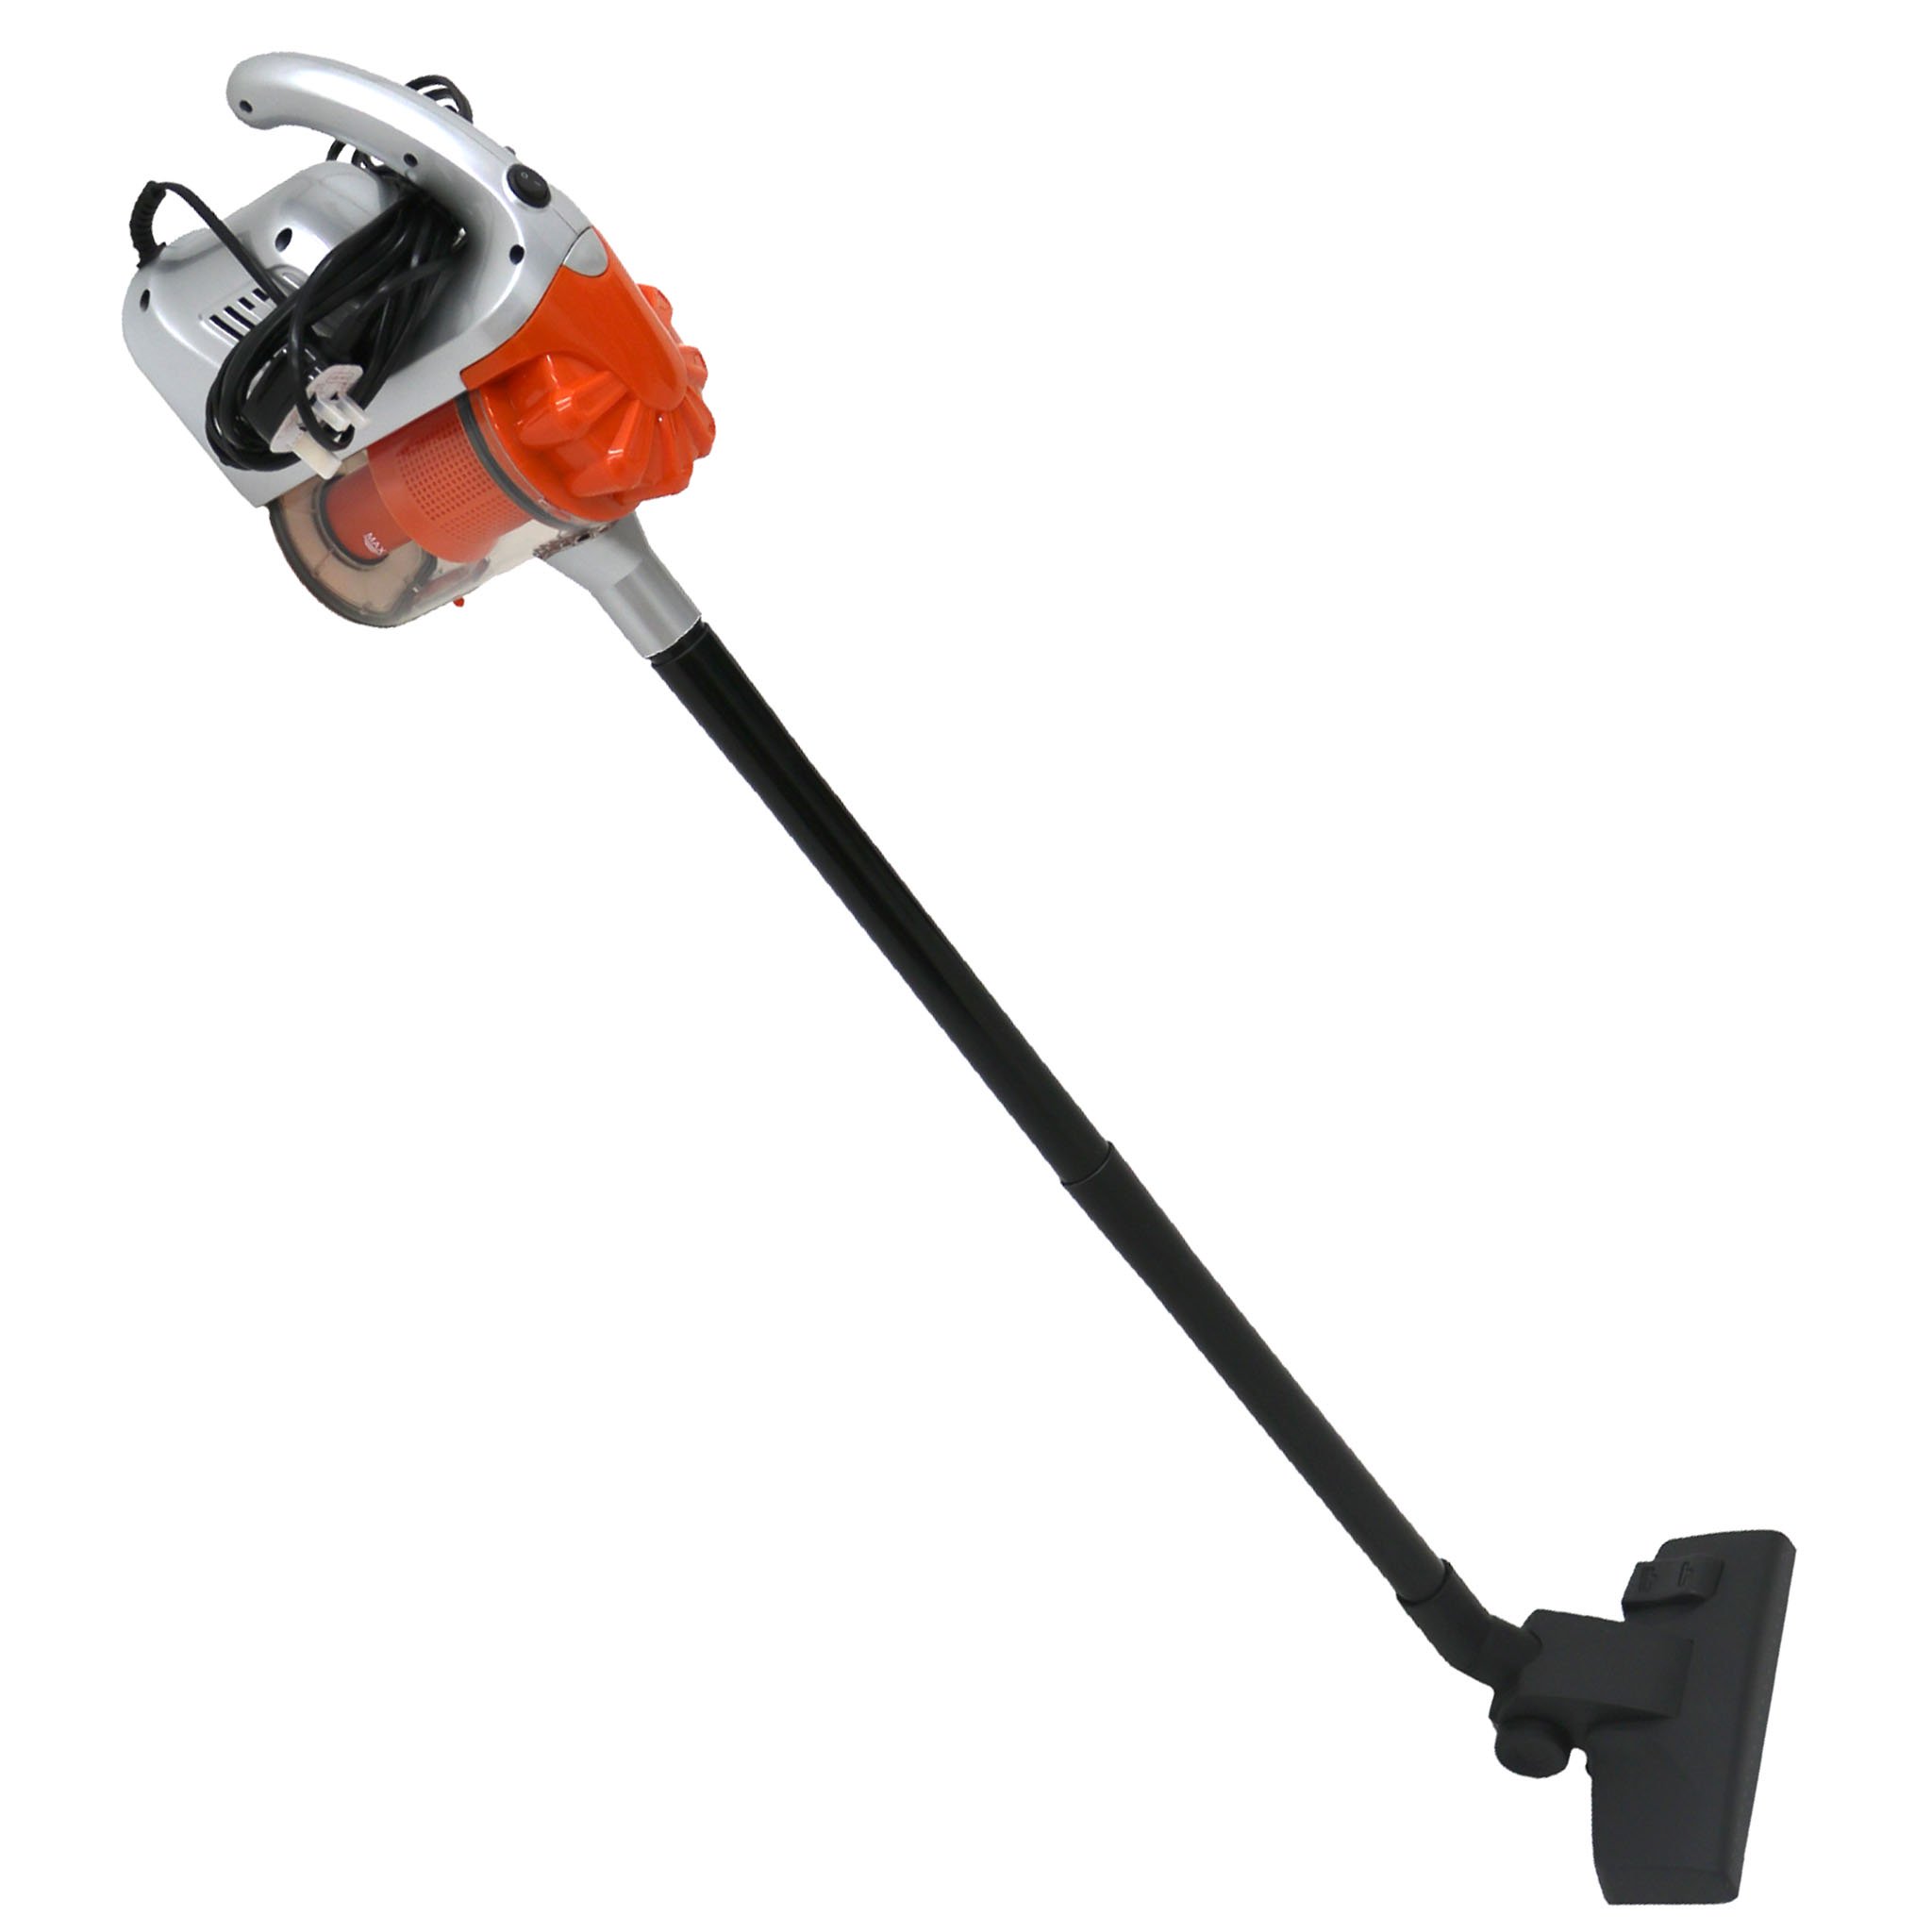 Handheld Cyclonic Handy Vacuum Cleaner Lightweight Upright